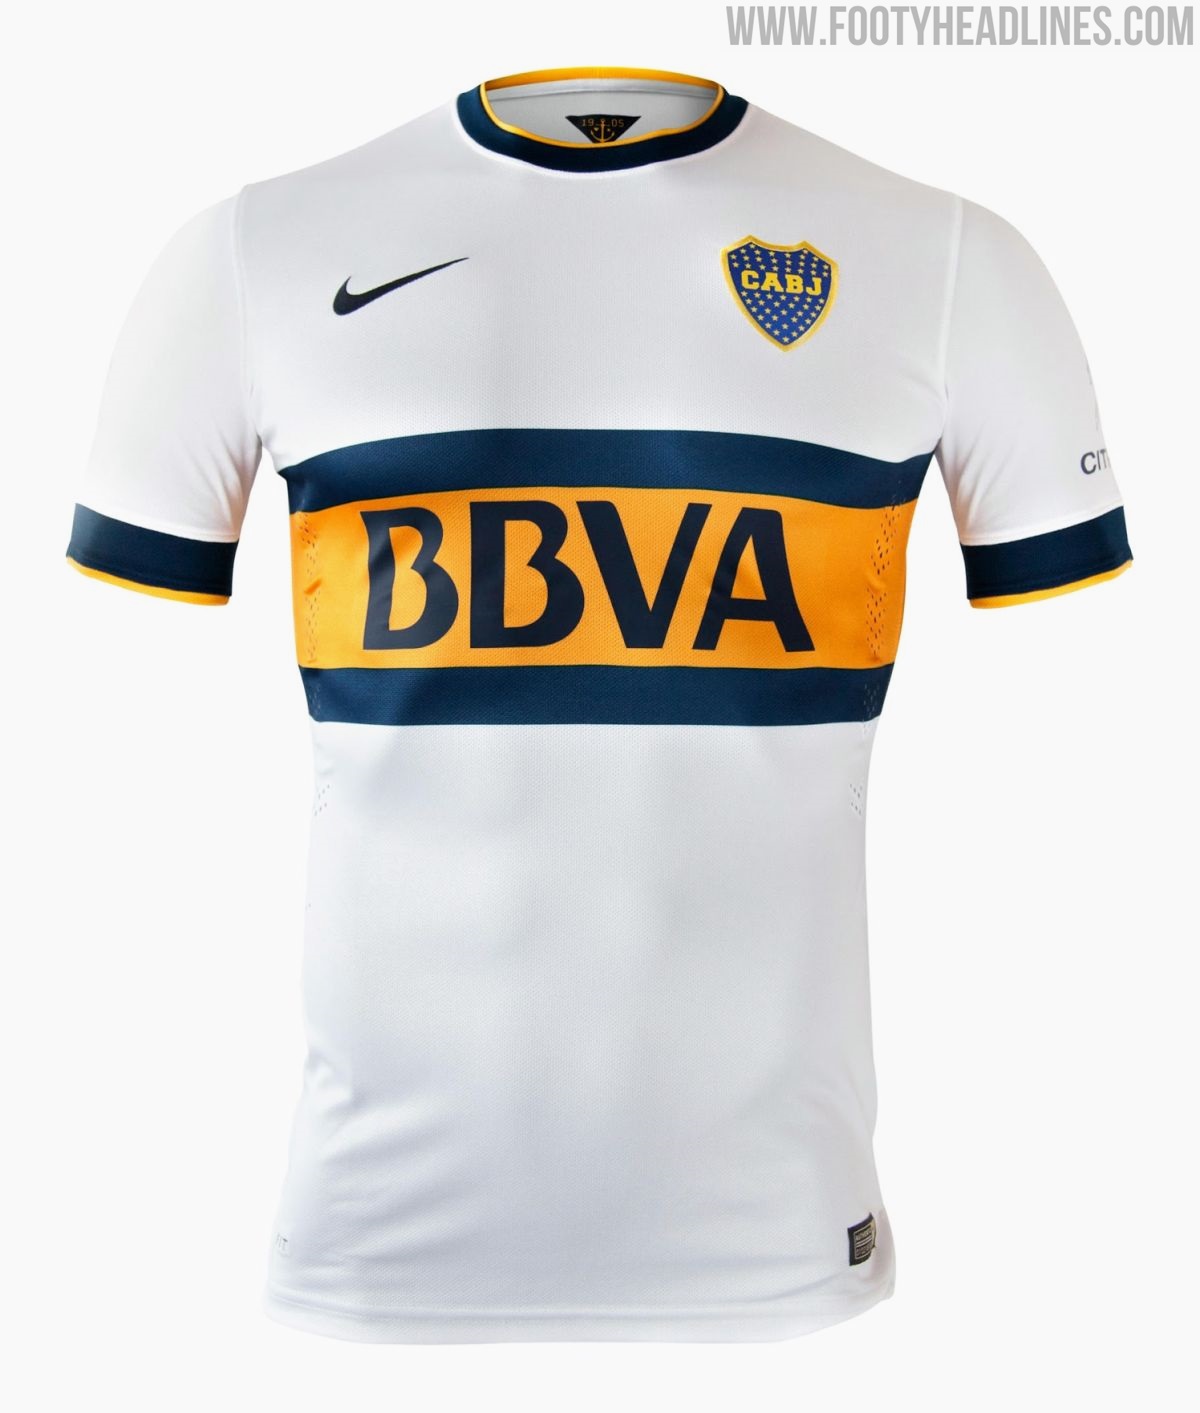 Who Did Best? Boca Juniors Away - Adidas - Footy Headlines